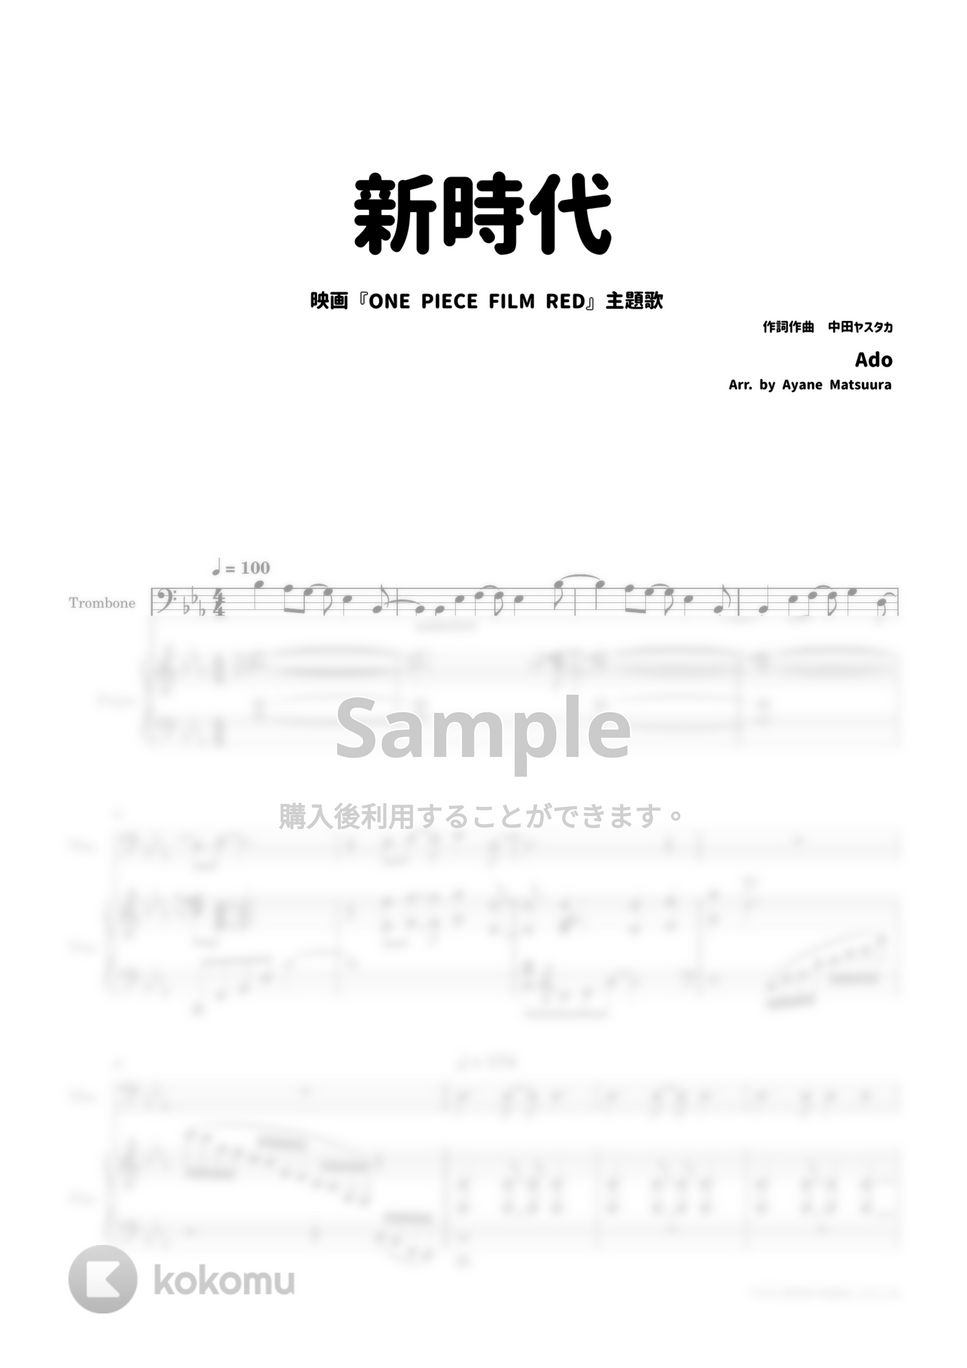 Ado - 新時代 [トロンボーン＆ピアノ] Ado (ONE PIECE FILM RED) by 管楽器の楽譜★ふるすこあ